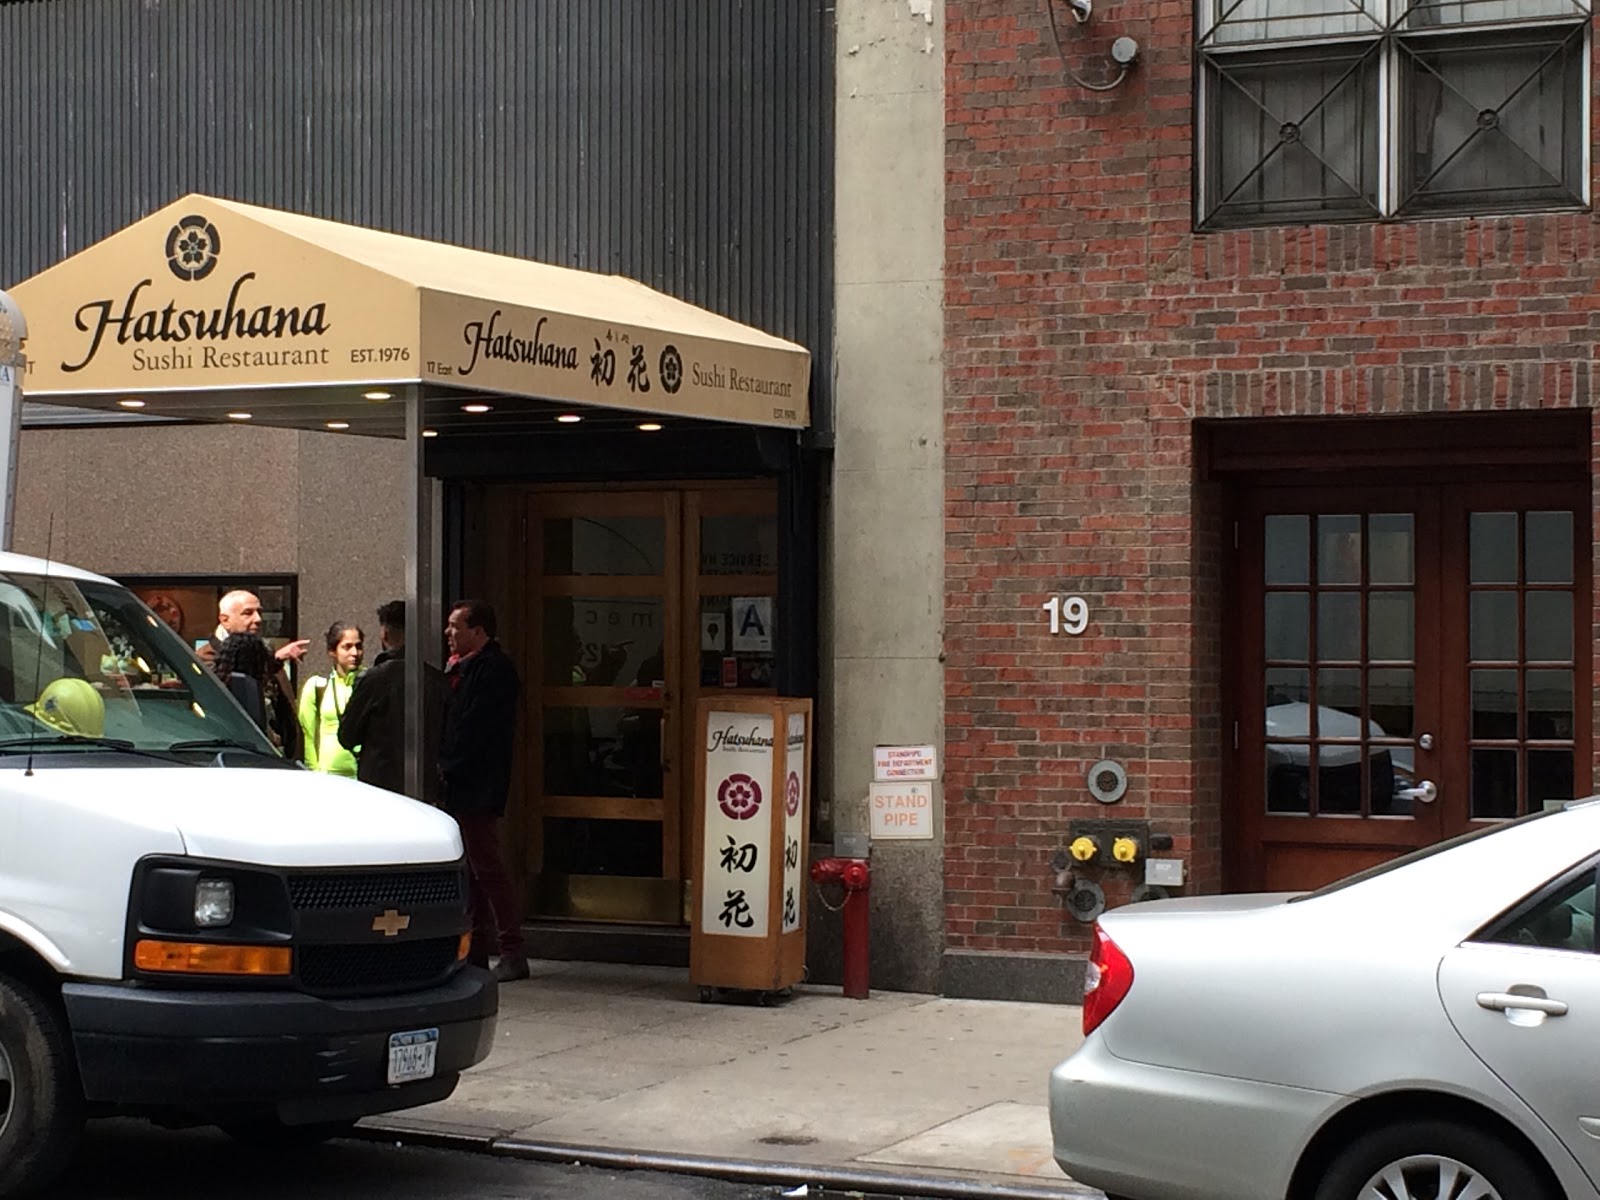 Photo of Hatsuhana in New York City, New York, United States - 4 Picture of Restaurant, Food, Point of interest, Establishment, Bar